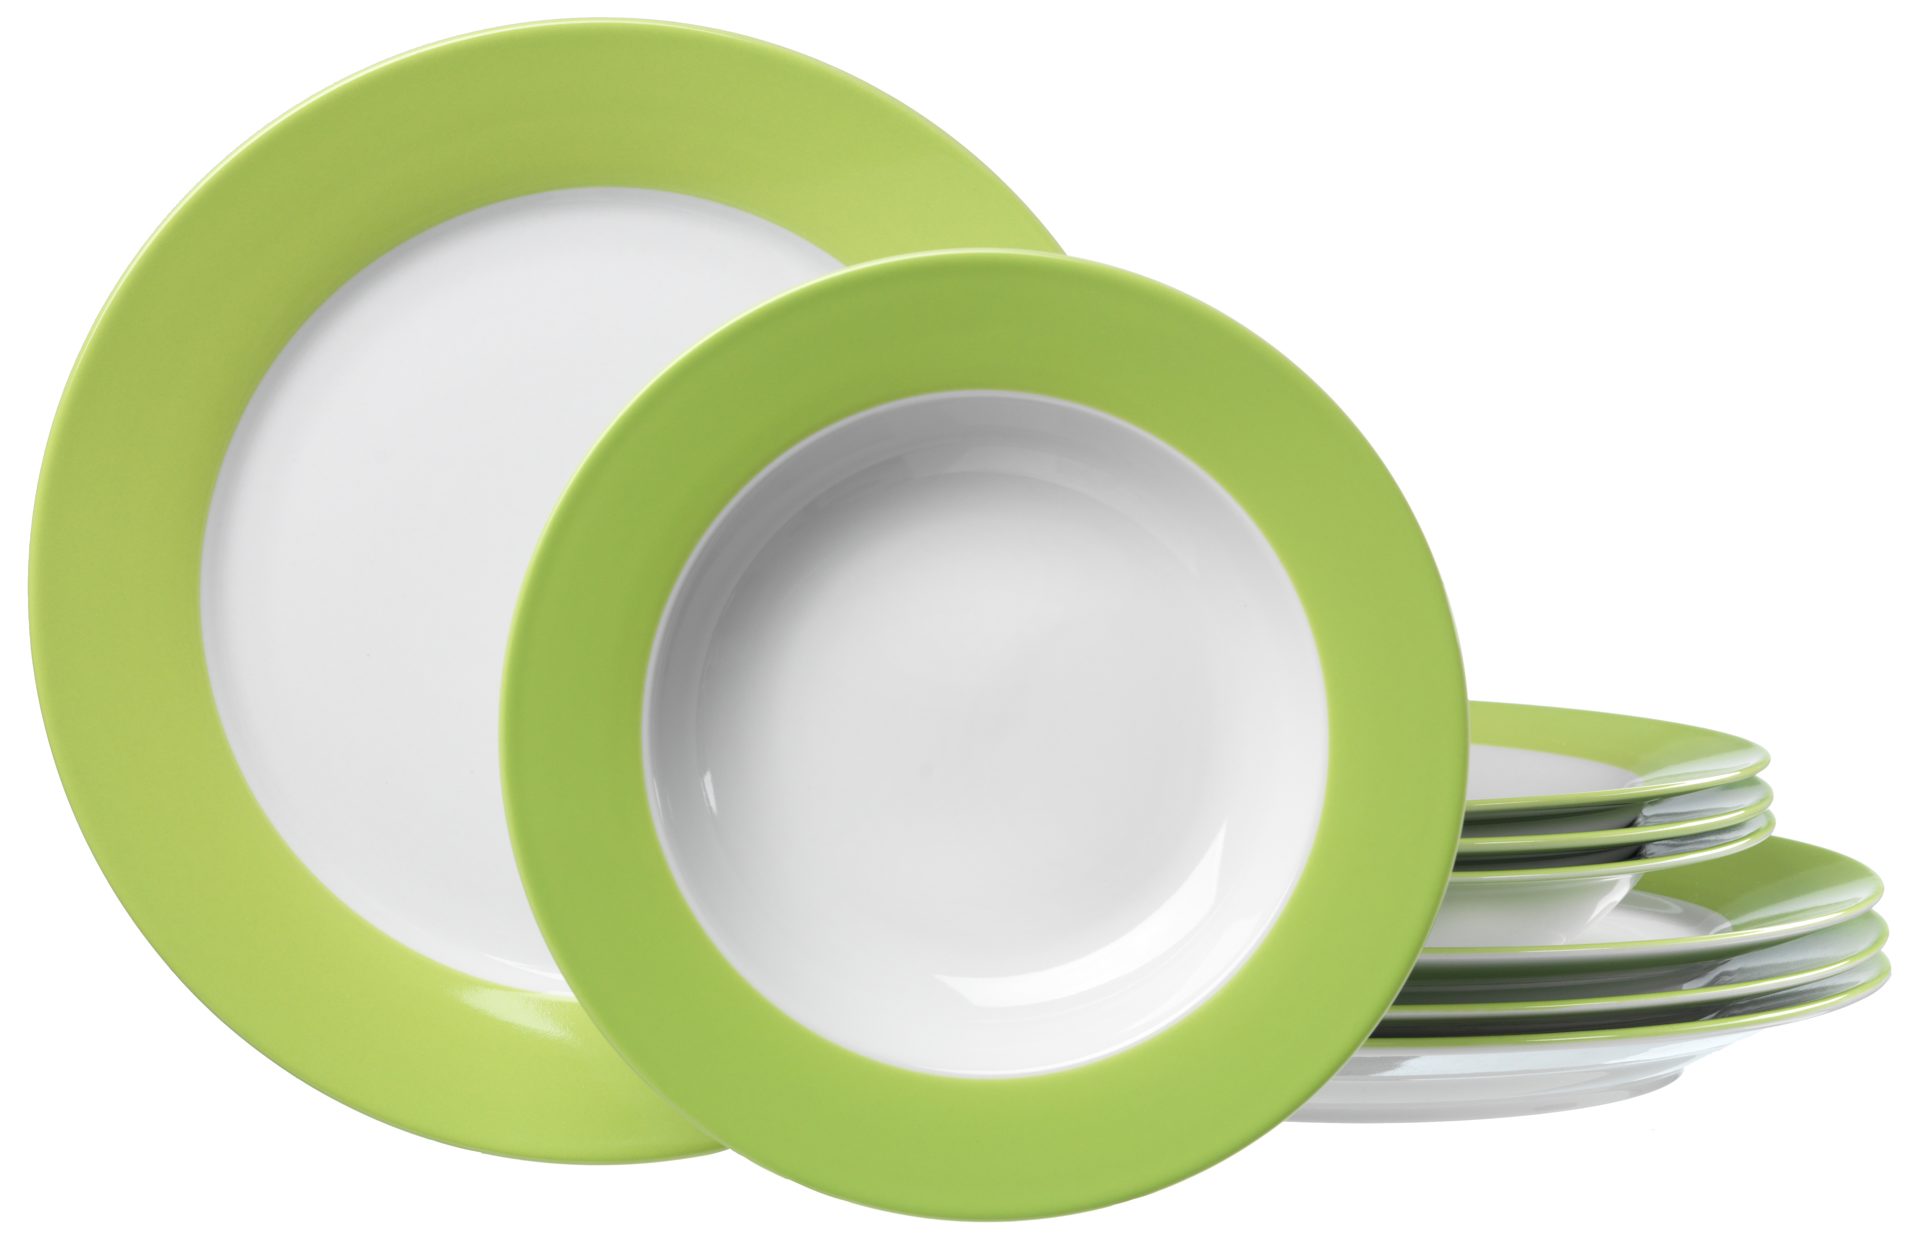 Tafelservice Ritzenhoff & breker aus Porzellan in Grün Tafelservice Doppio weißes Porzellan mit grünem Rand - 8-teilig, Tafelgeschirr